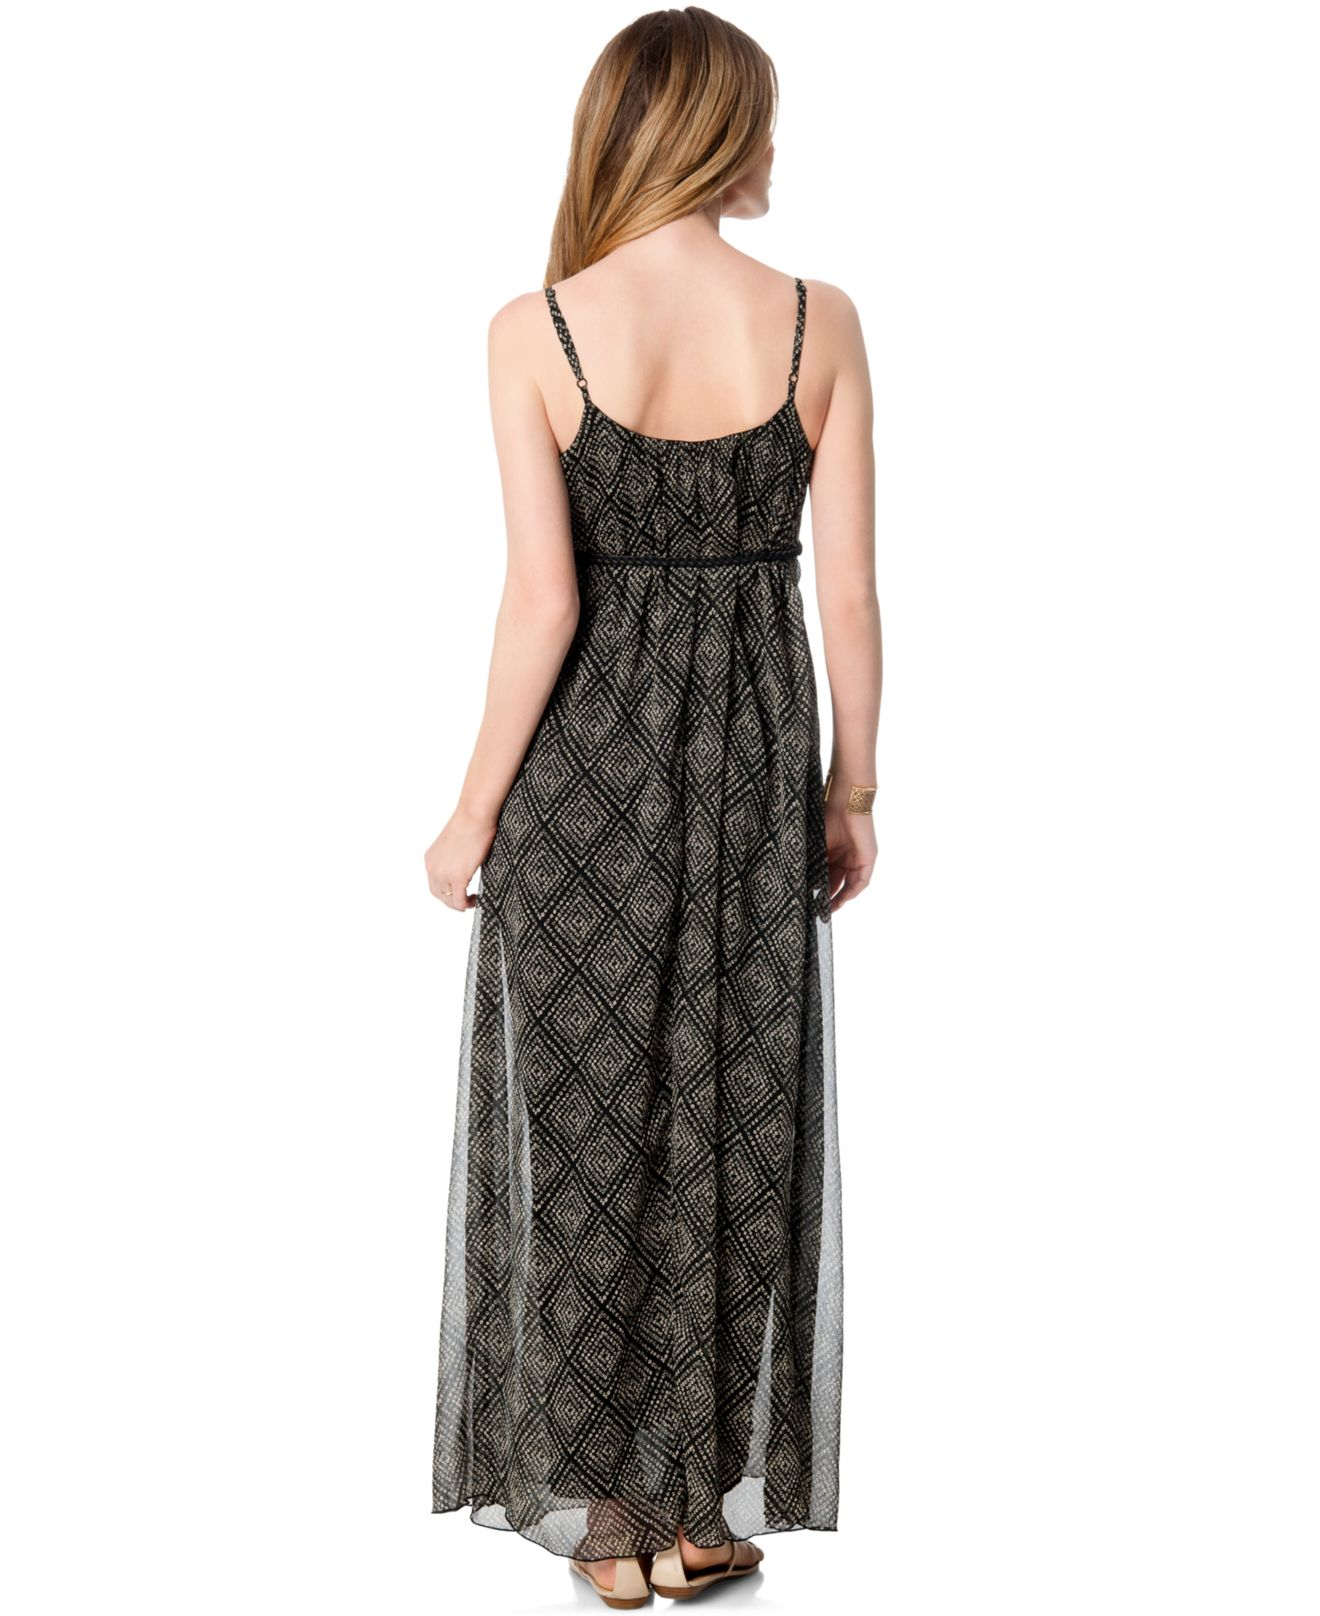 Lyst - Jessica Simpson Maternity Printed Maxi Dress in Black1320 x 1616